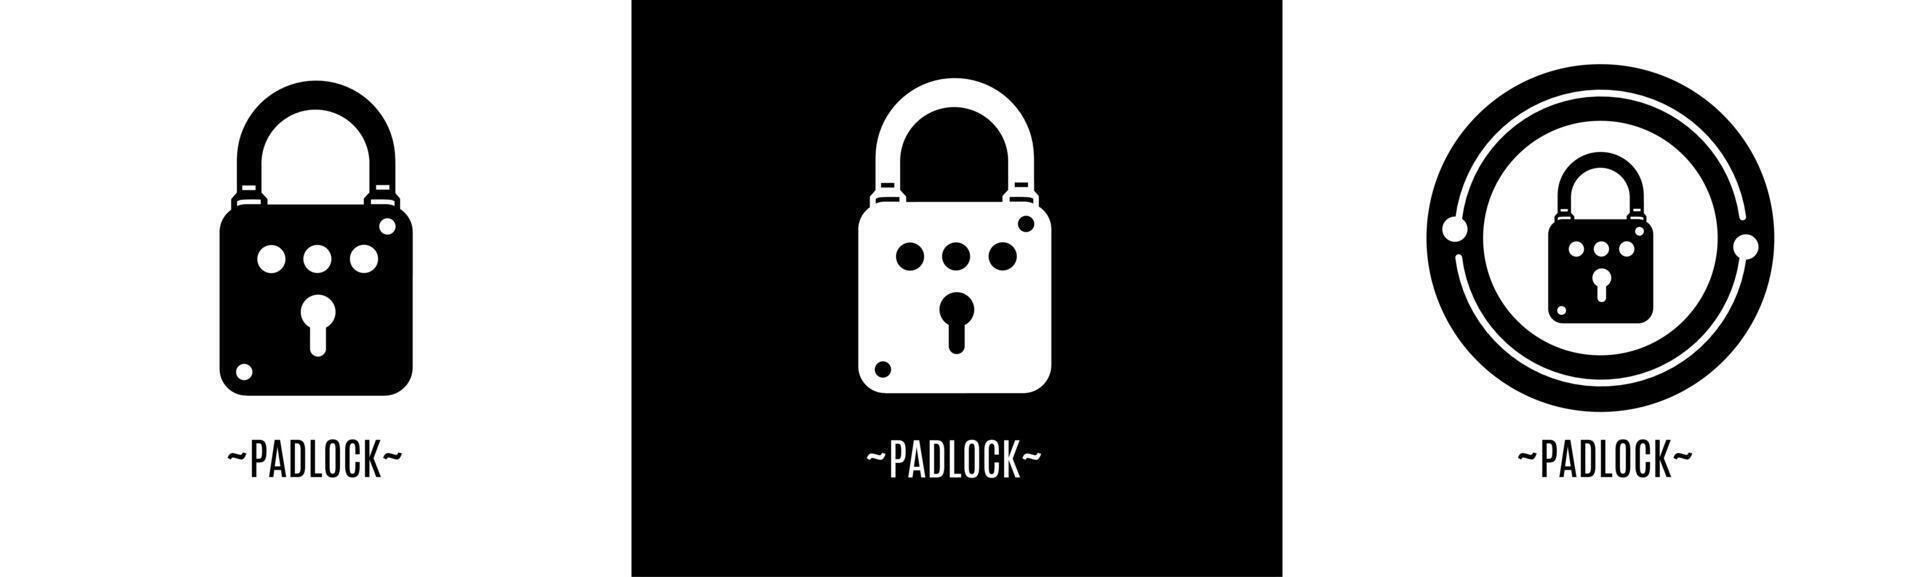 Padlock logo set. Collection of black and white logos. Stock vector. vector